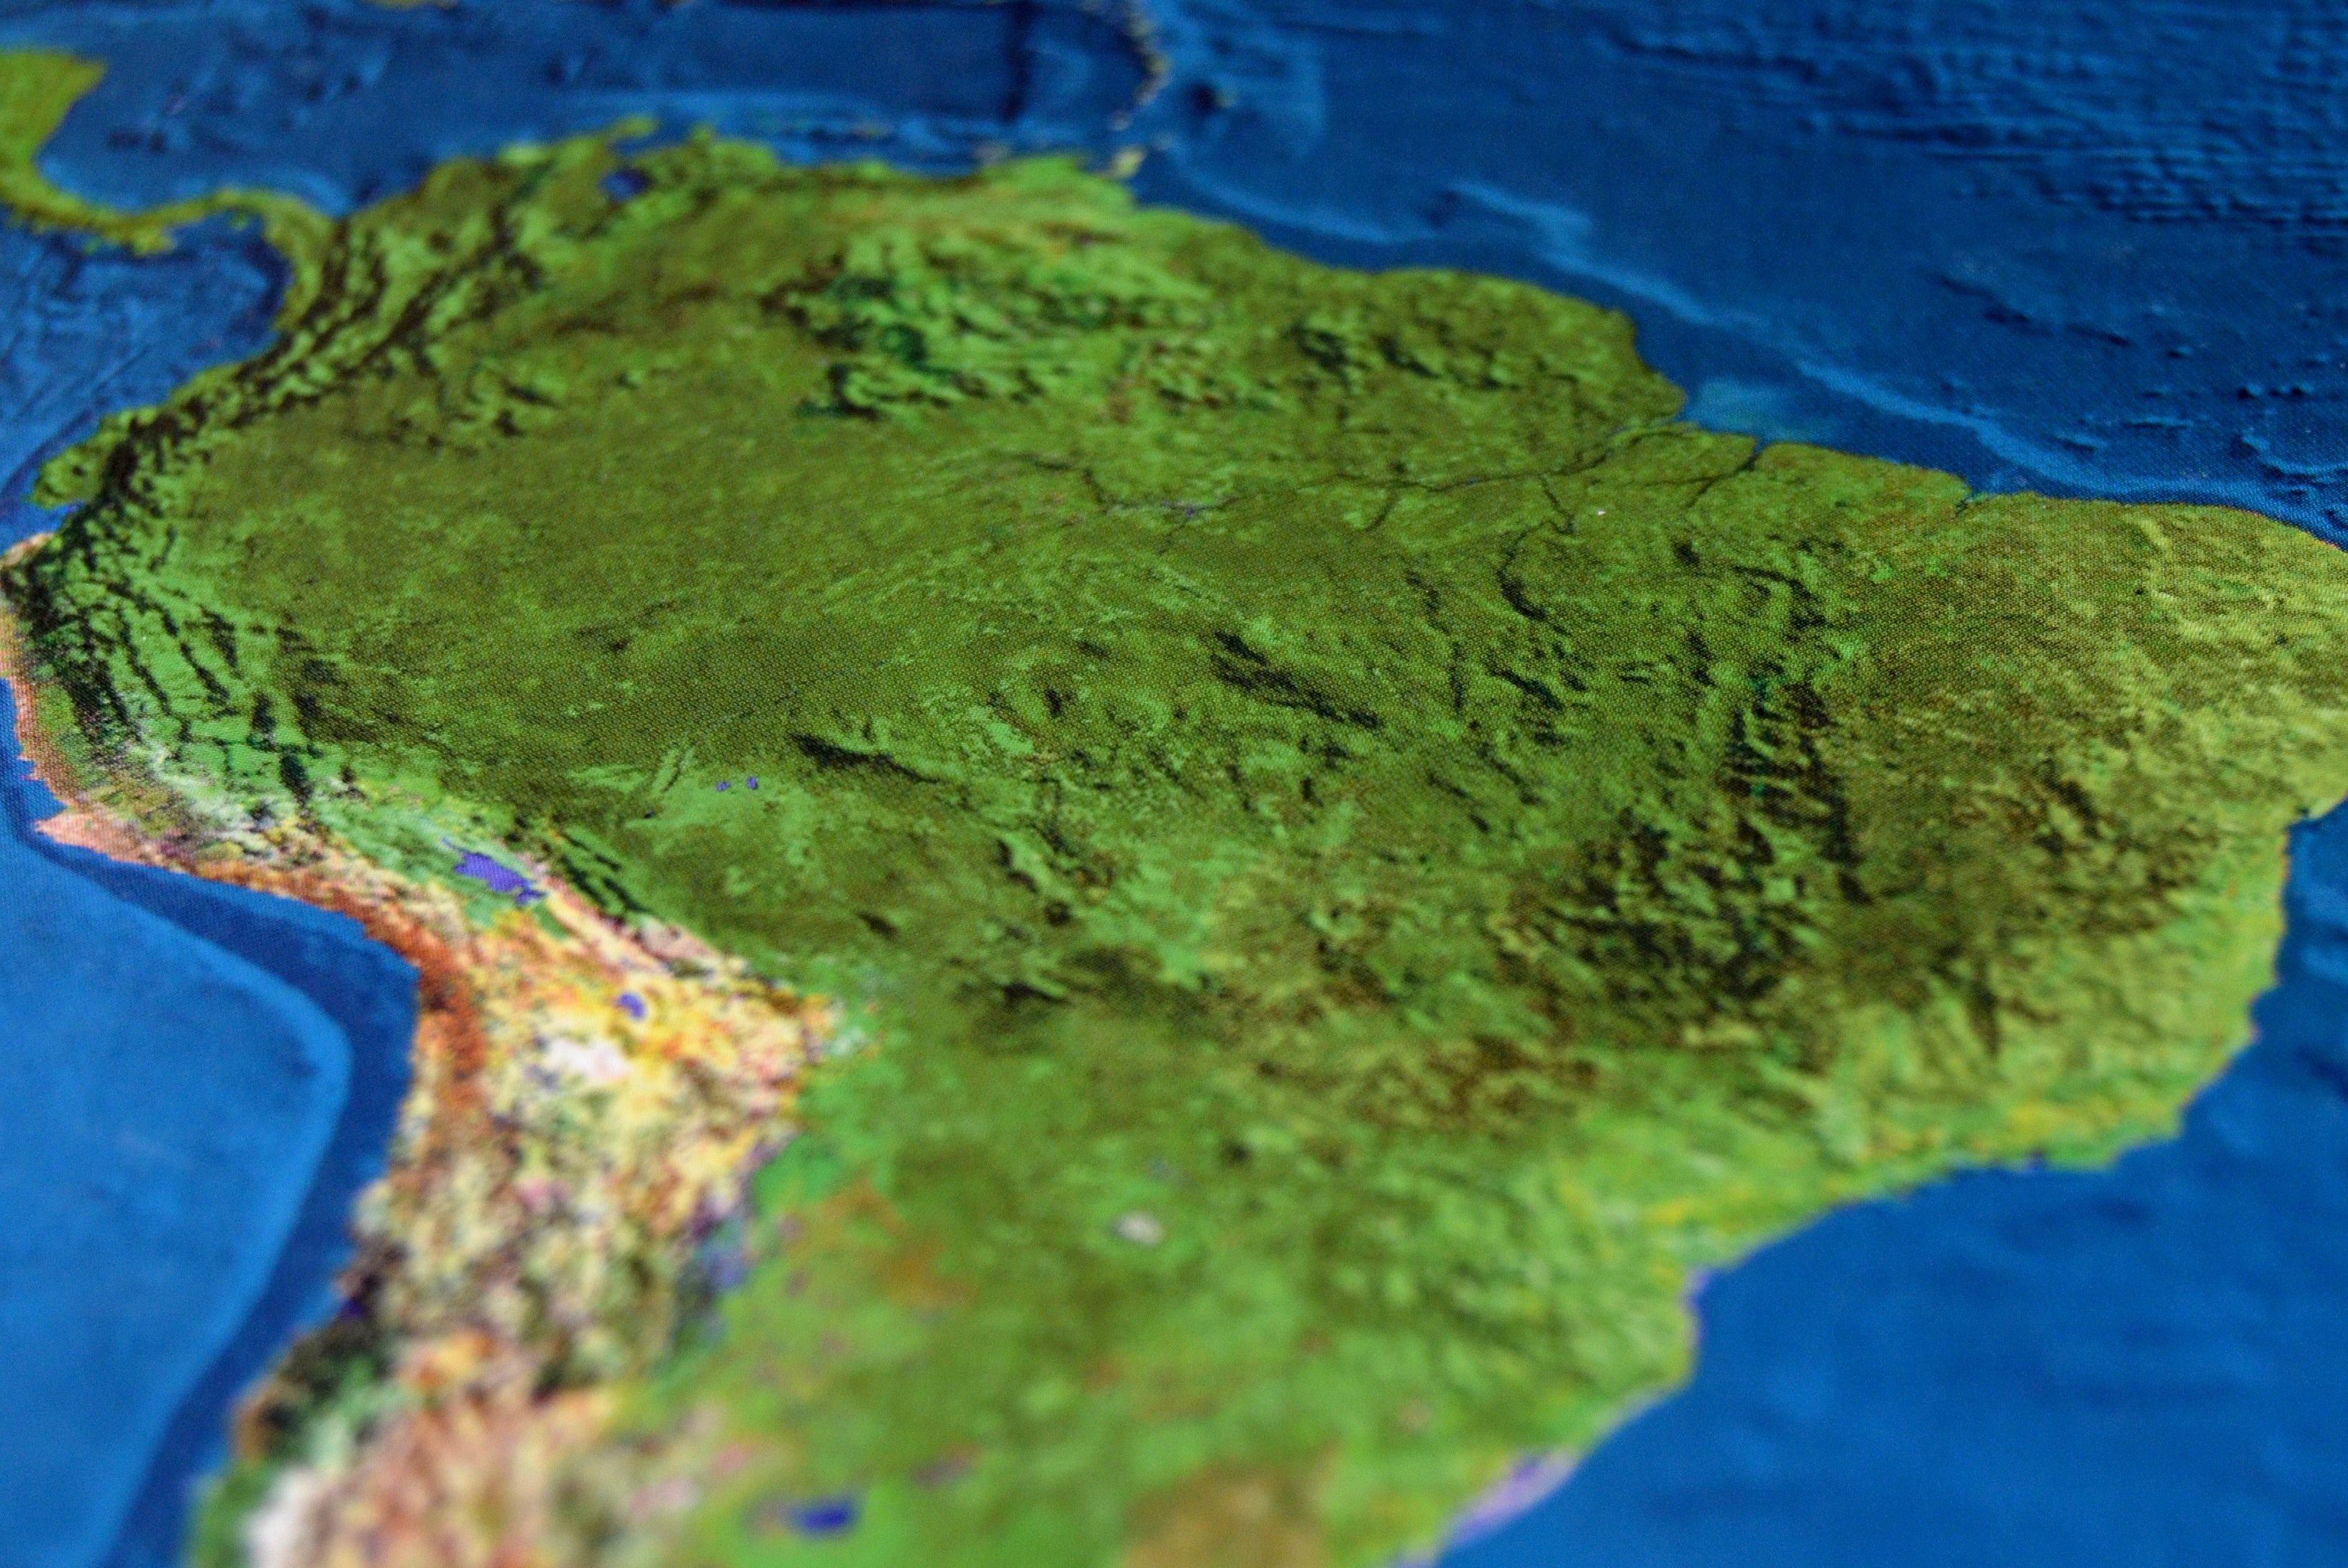 Encouraging Open Science in Latin America